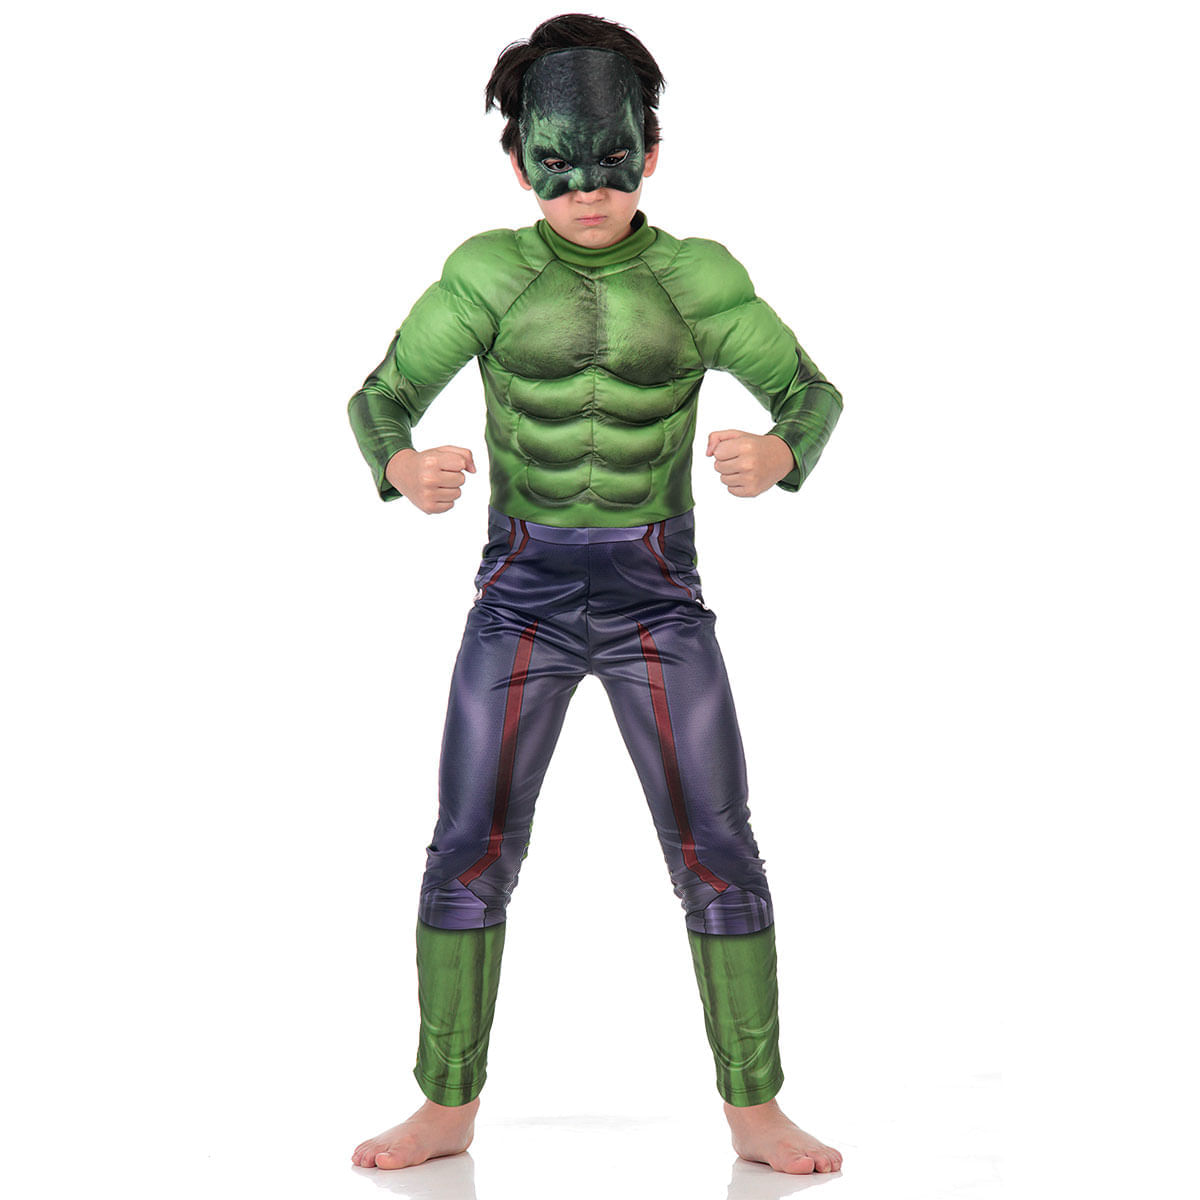 Fantasia Hulk Infantil Peitoral - Avengers P / UNICA